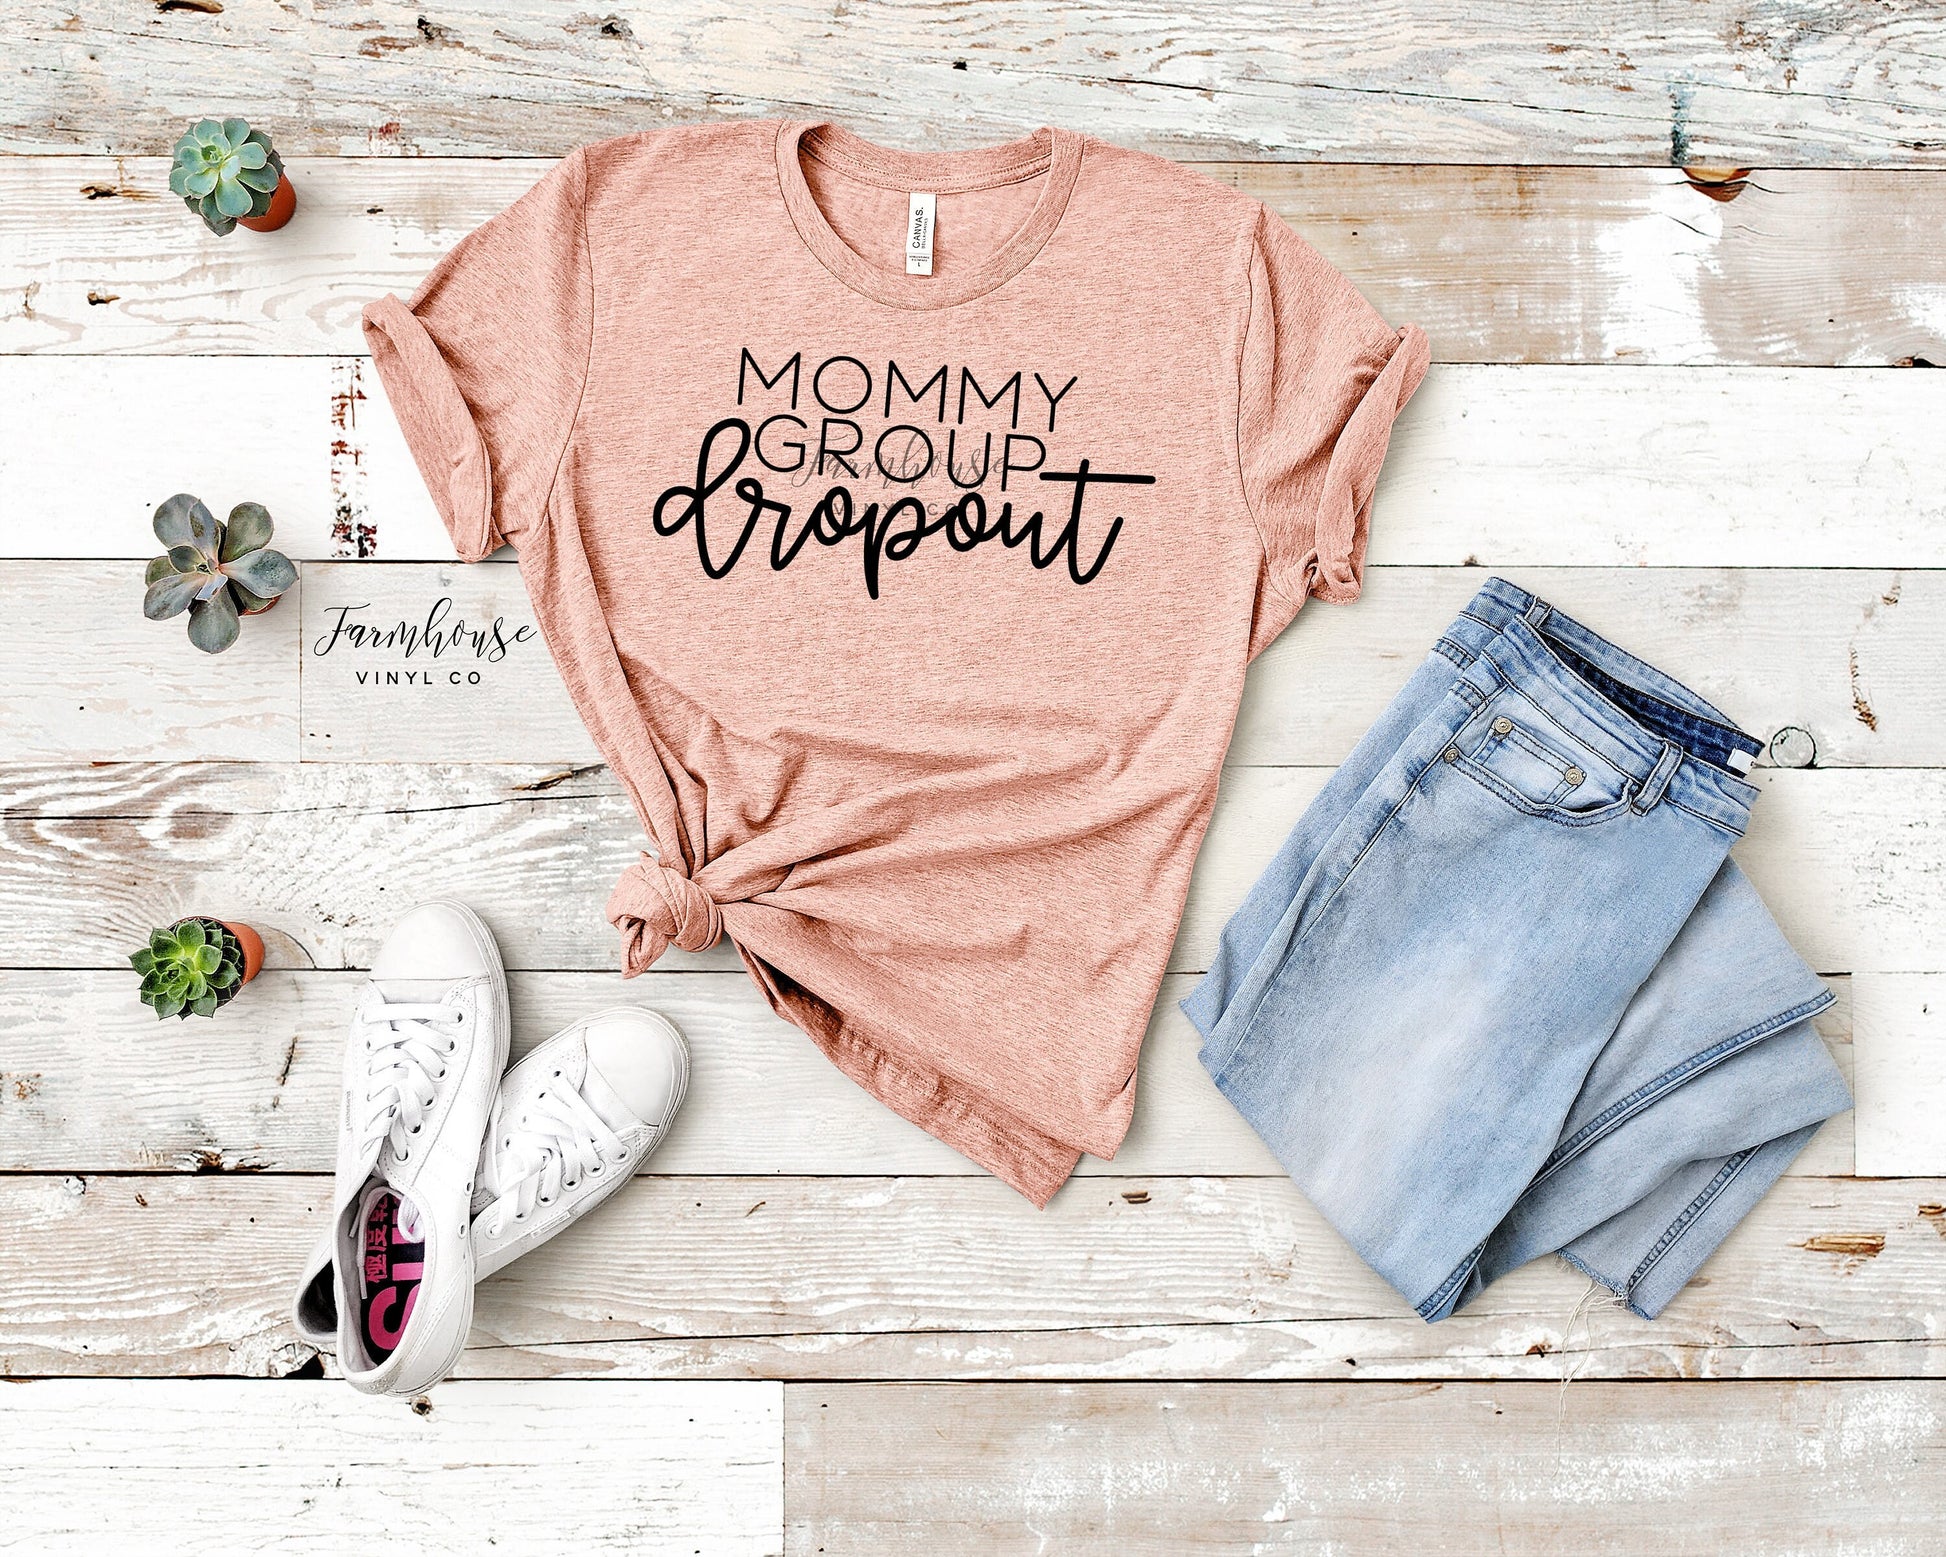 Mama Mirror Tee Shirt~Mom Shirt Collection~Mom Tee Shirts~Mom Tee~Mom Shirts~SAHM~Mothers Day Gift~Homeschool Mom~Funny Mom Shirts - Farmhouse Vinyl Co